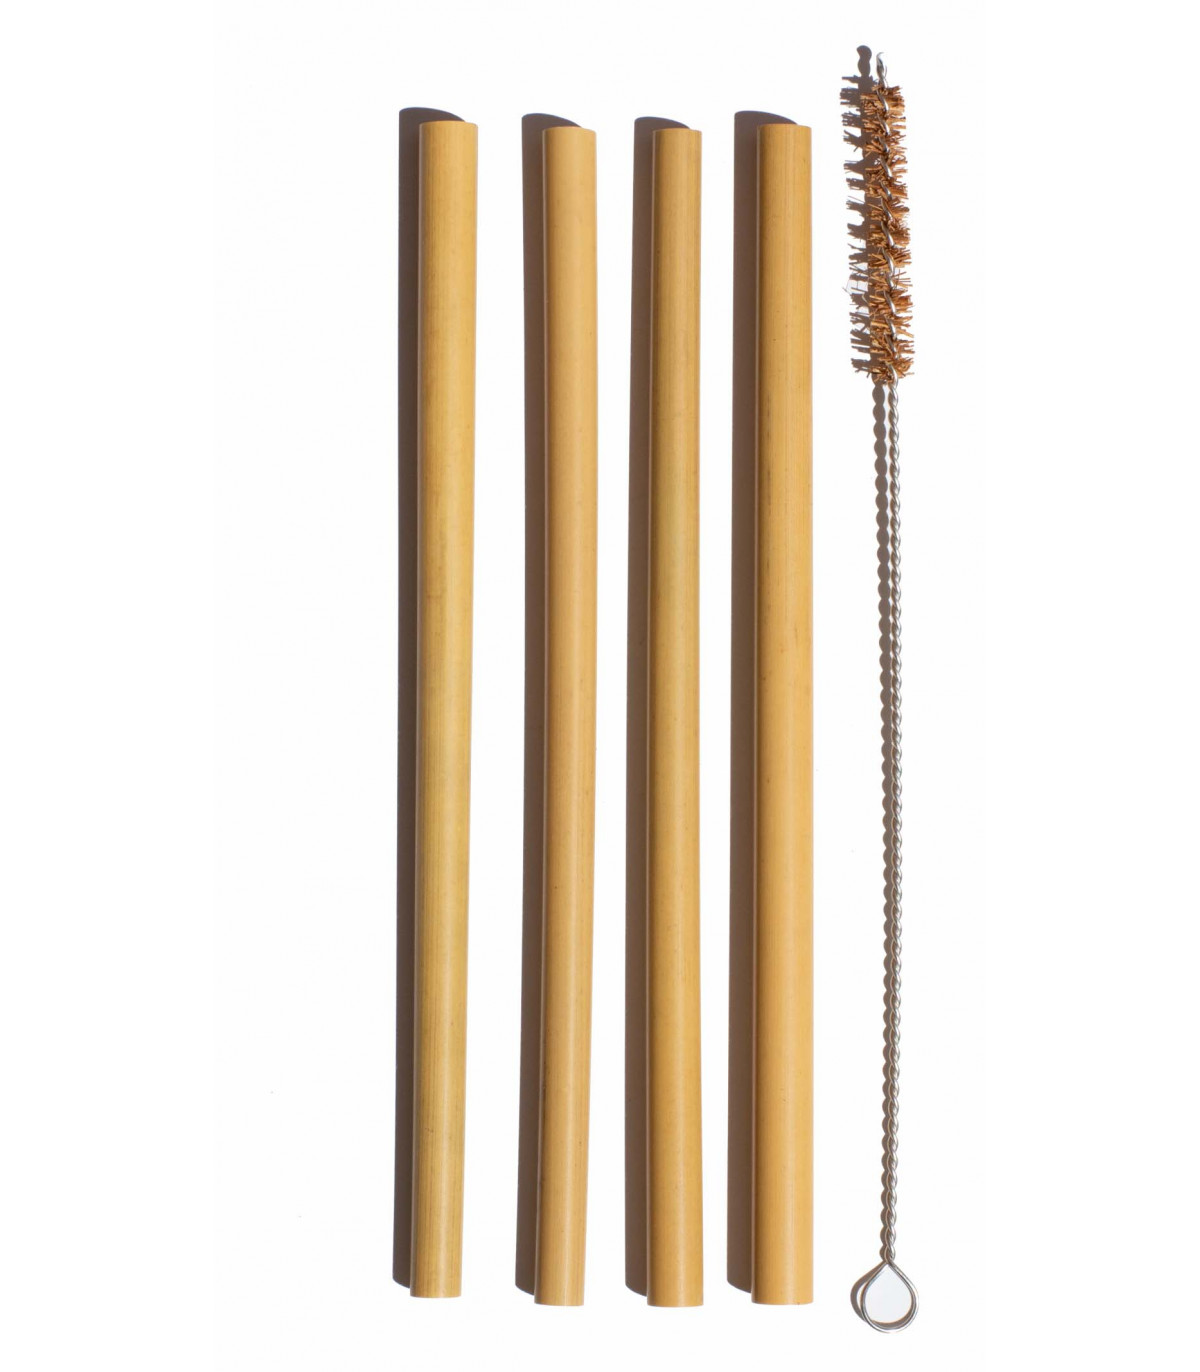 Paille en bamboo avec goupillon par 4